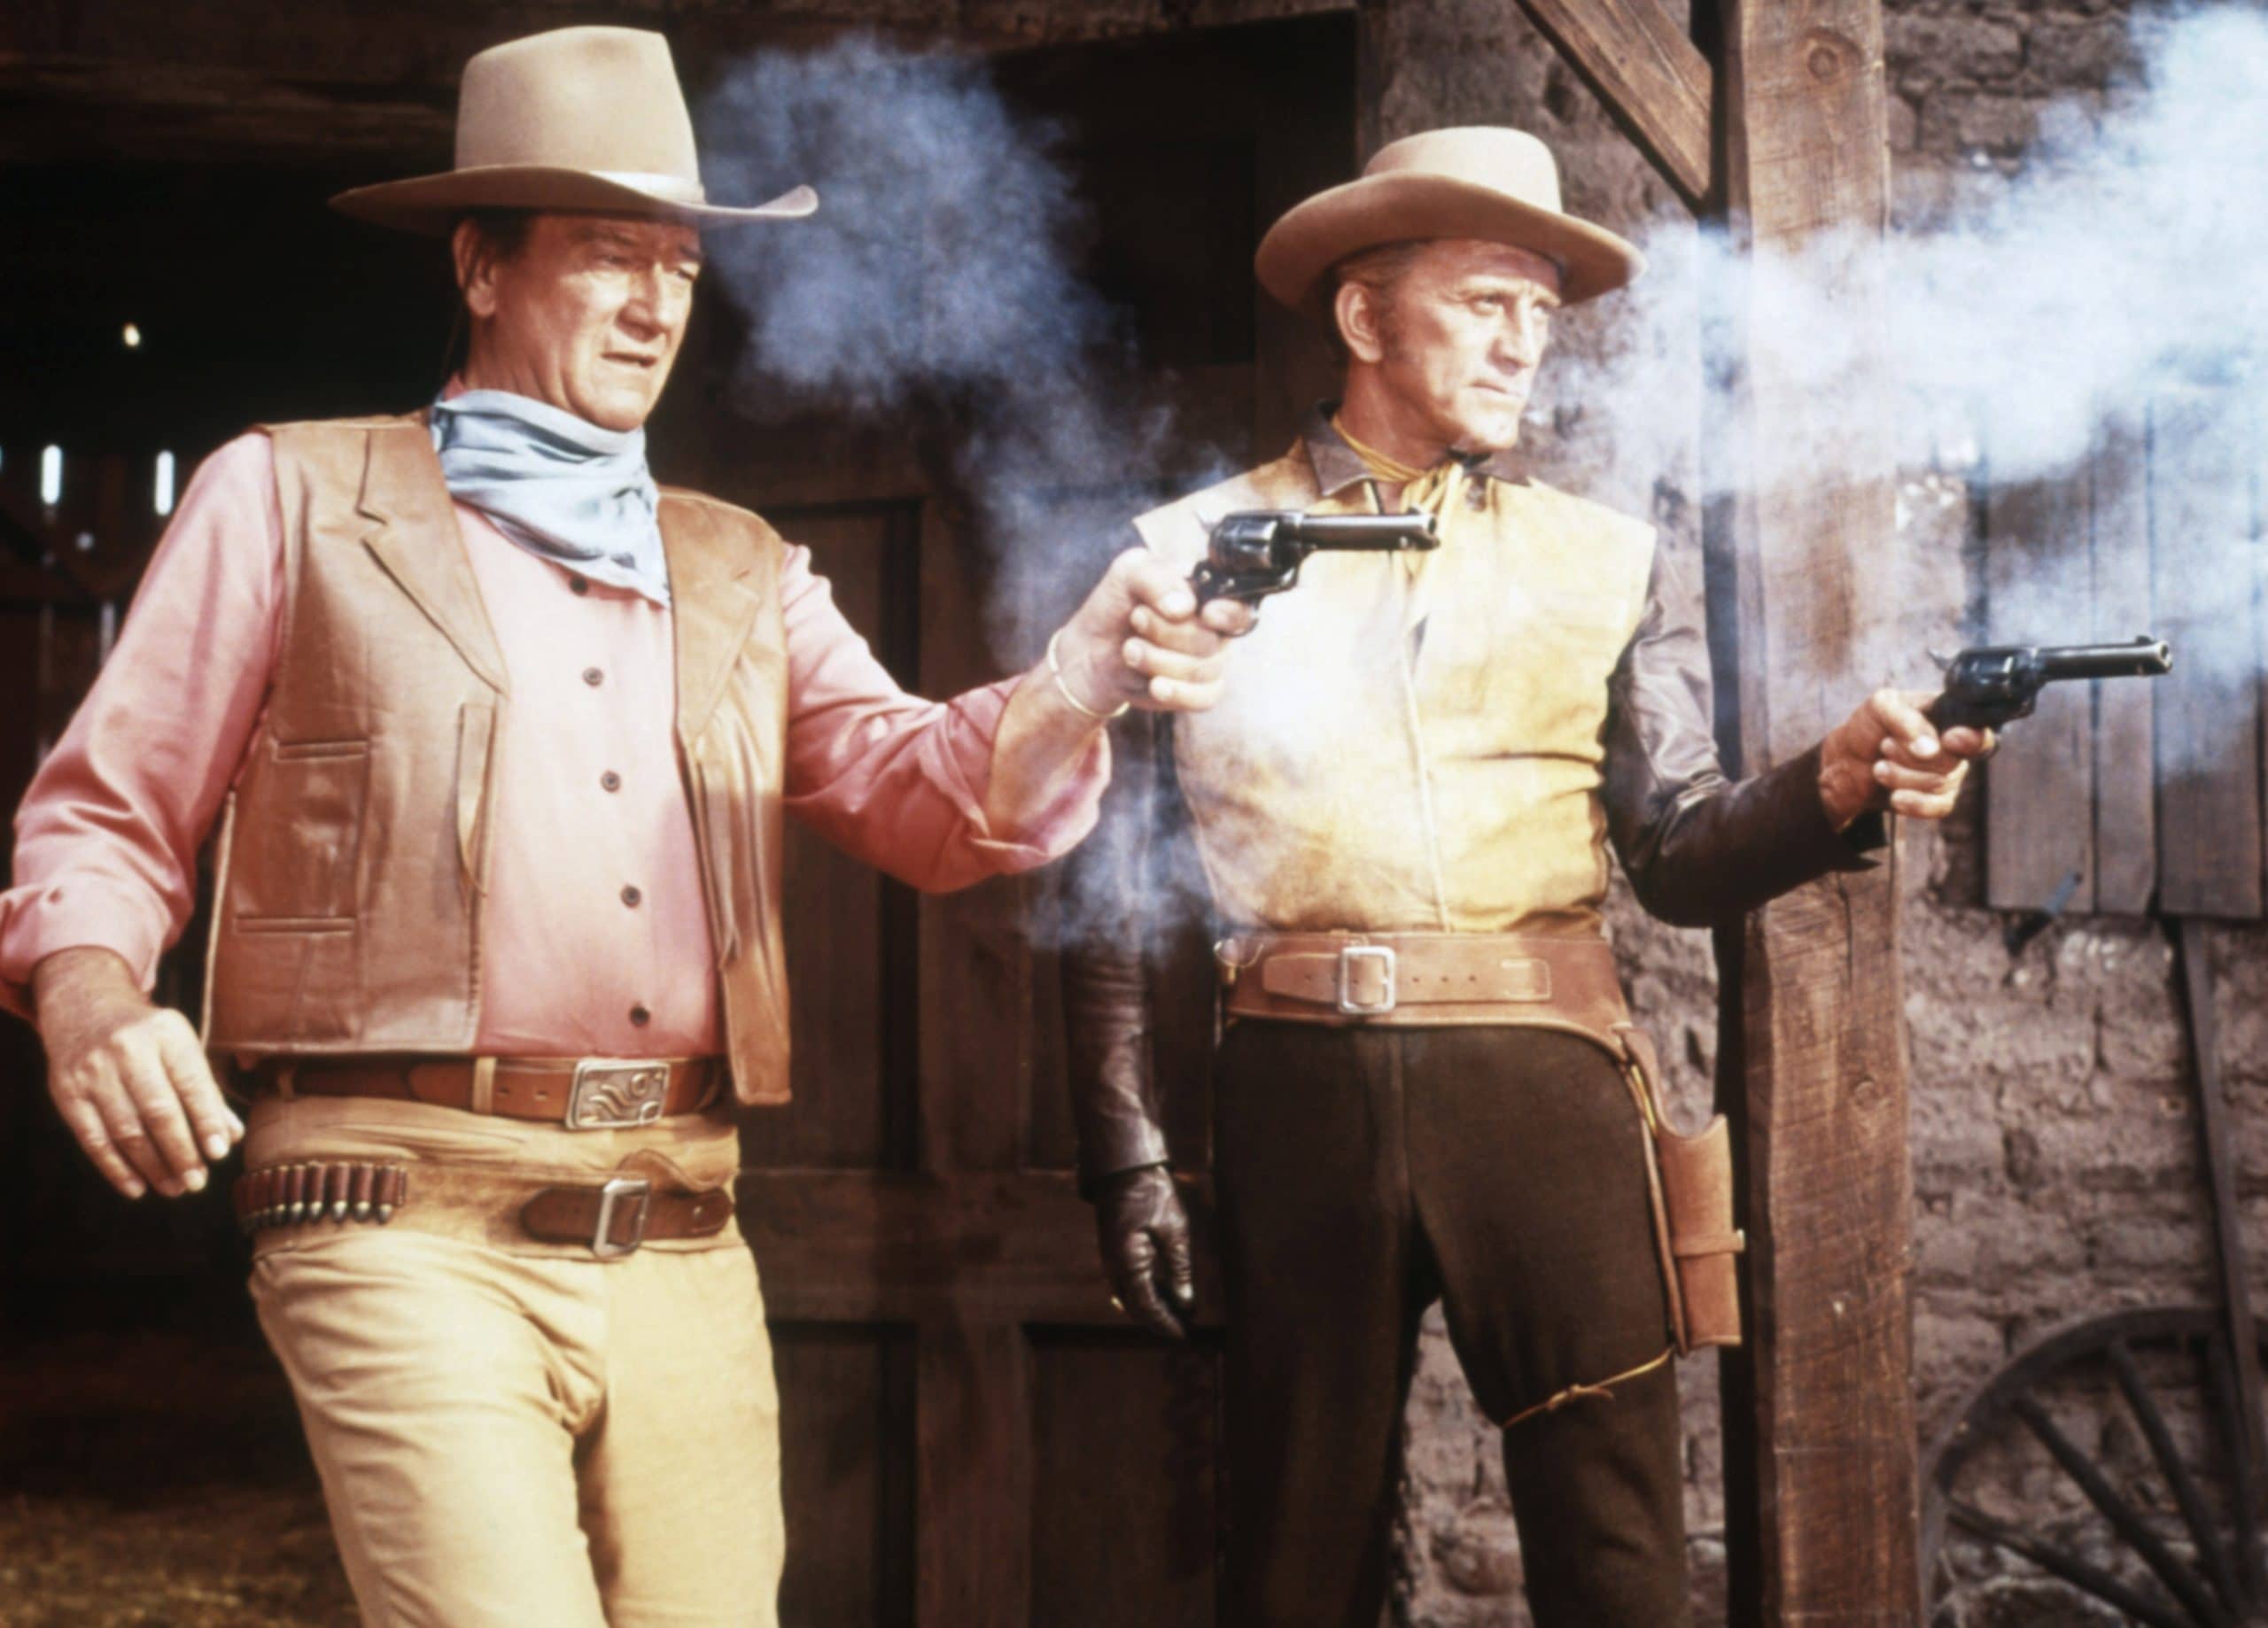 THE WAR WAGON, from left: John Wayne, Kirk Douglas, 1967